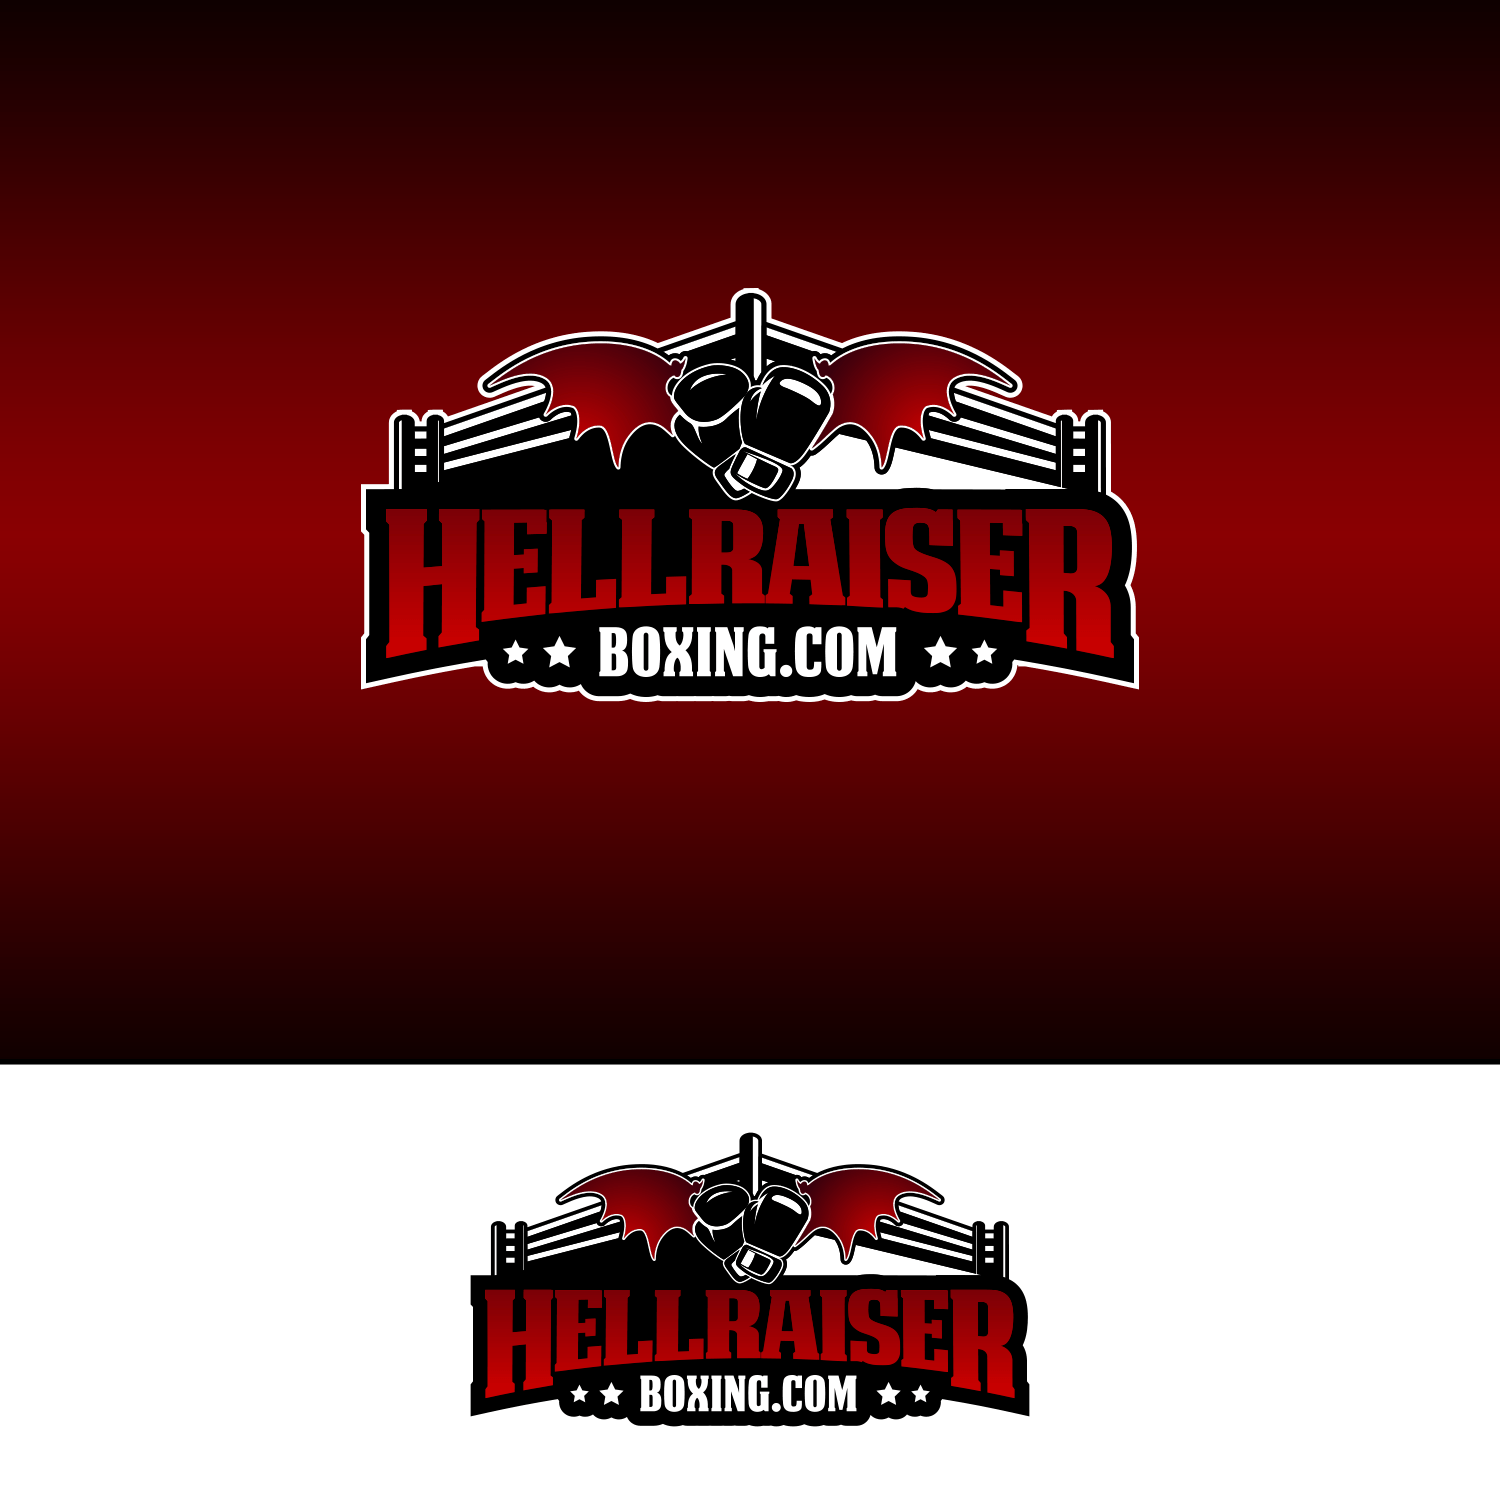 Hellraiser Logo - Playful, Masculine Logo Design for HellraiserBoxing.com